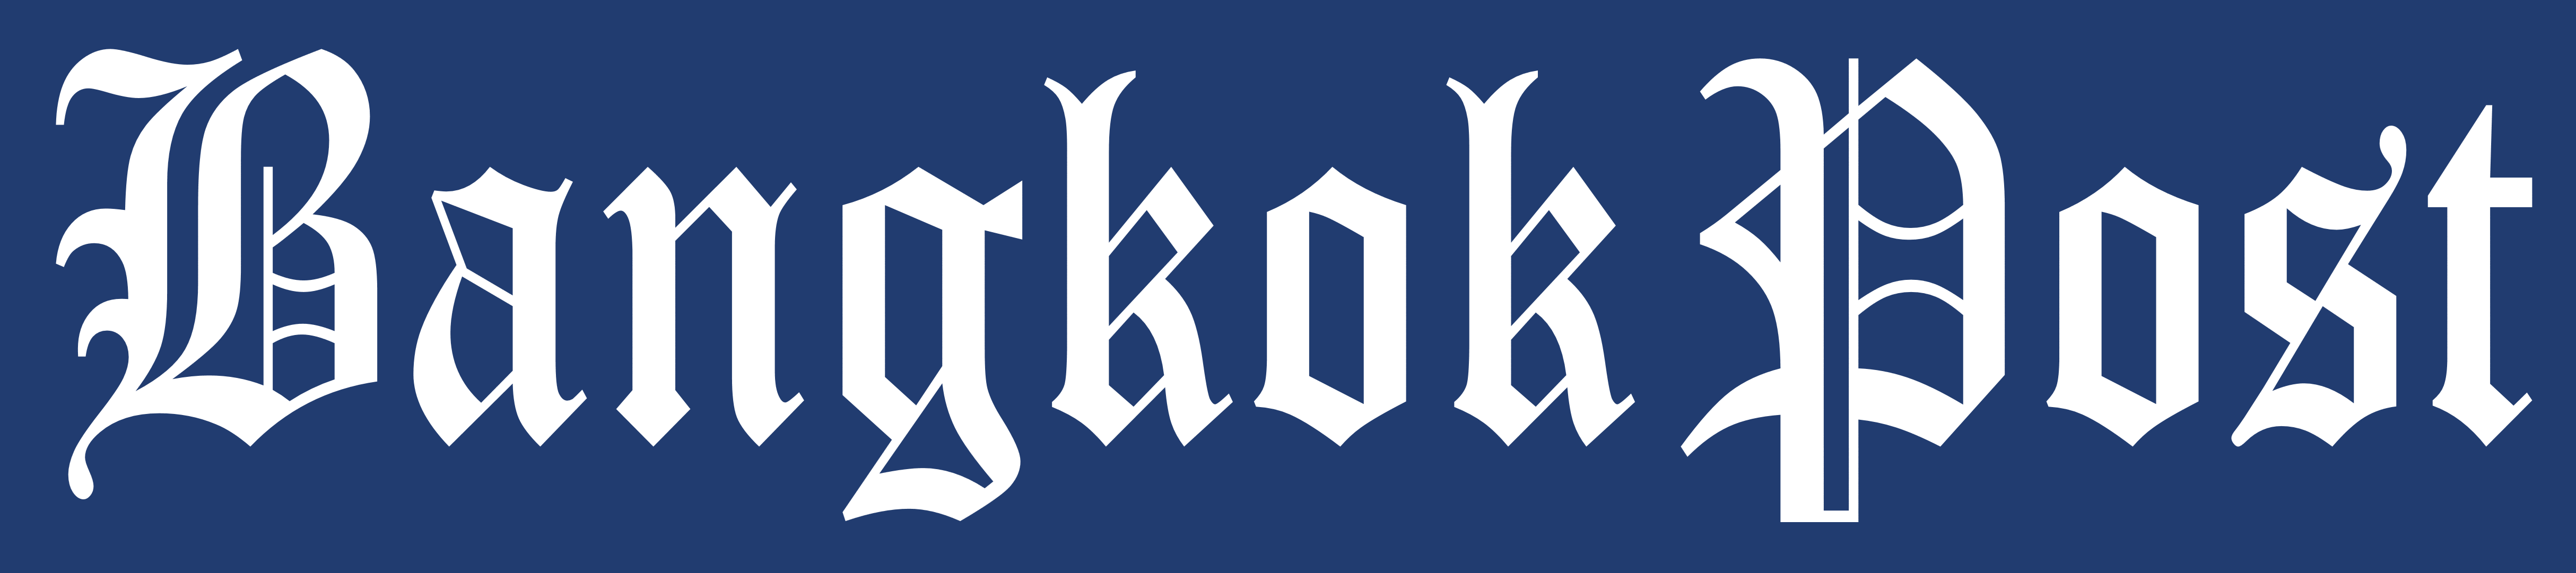 Bangkok Post – Logos Download